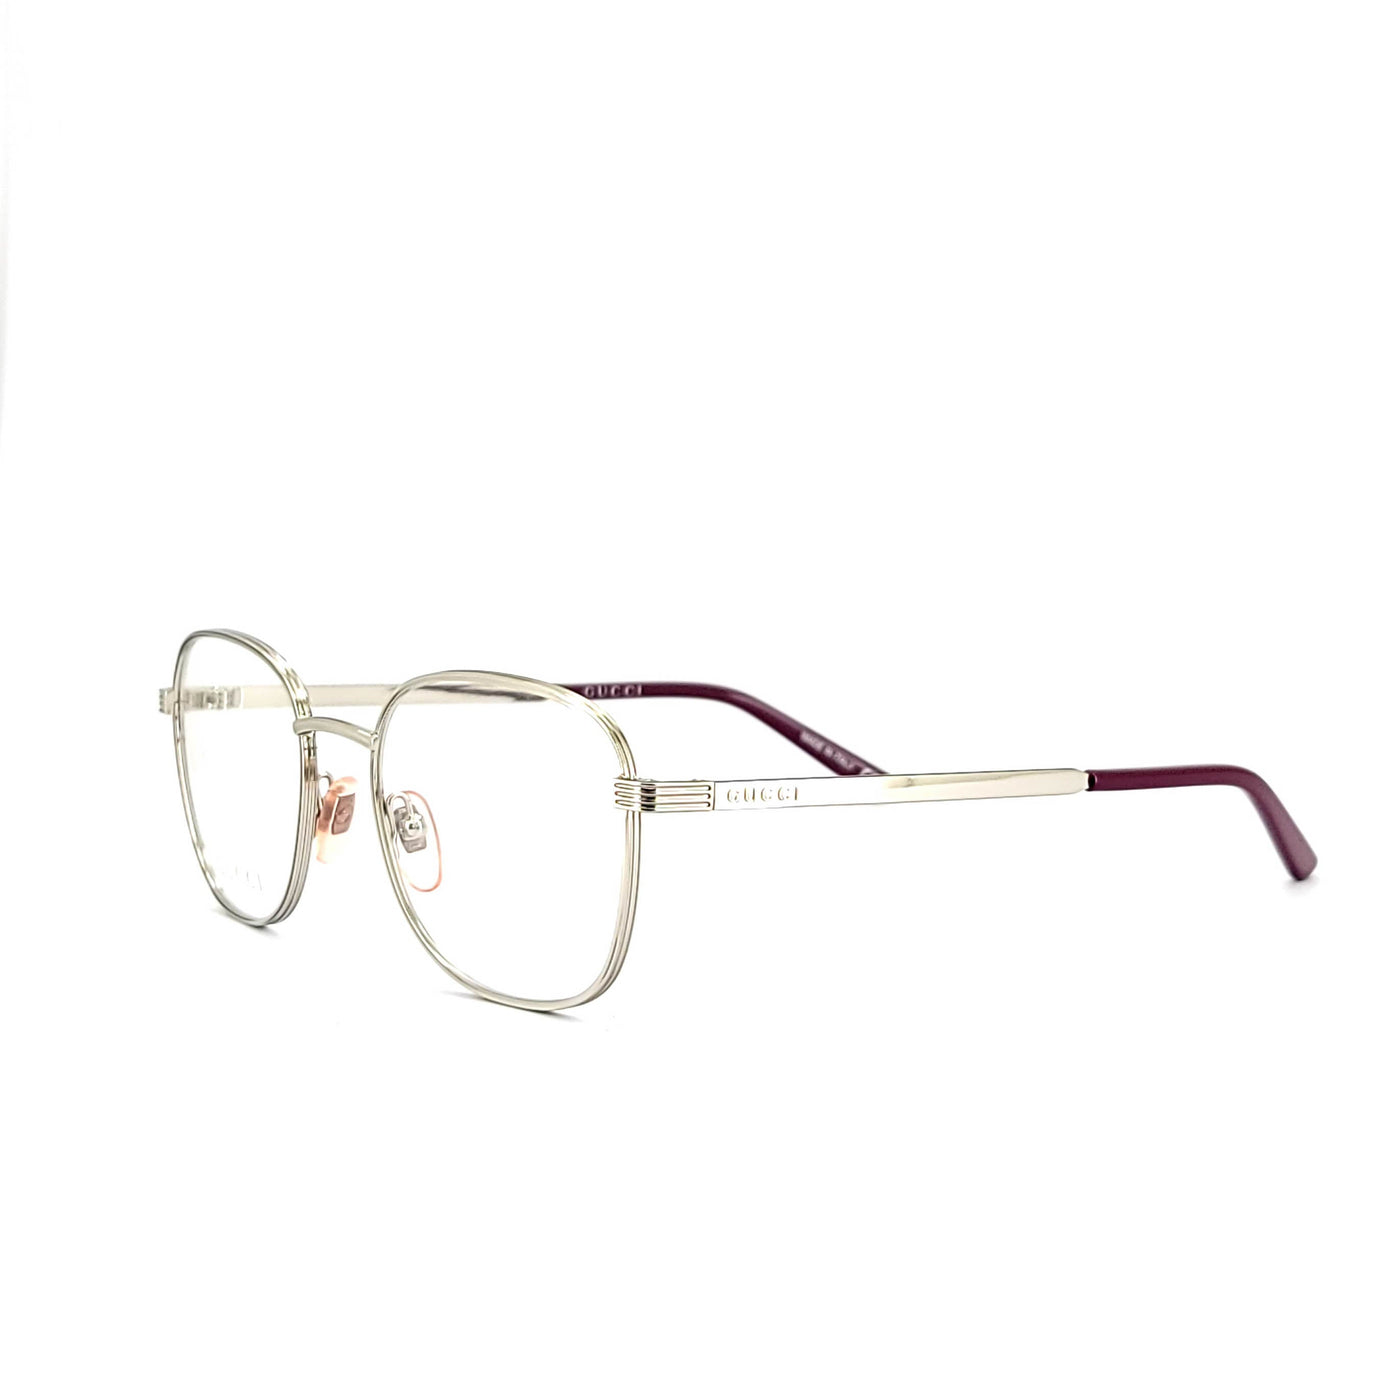 Gucci GG 0805O/002 | Eyeglasses - Vision Express Optical Philippines